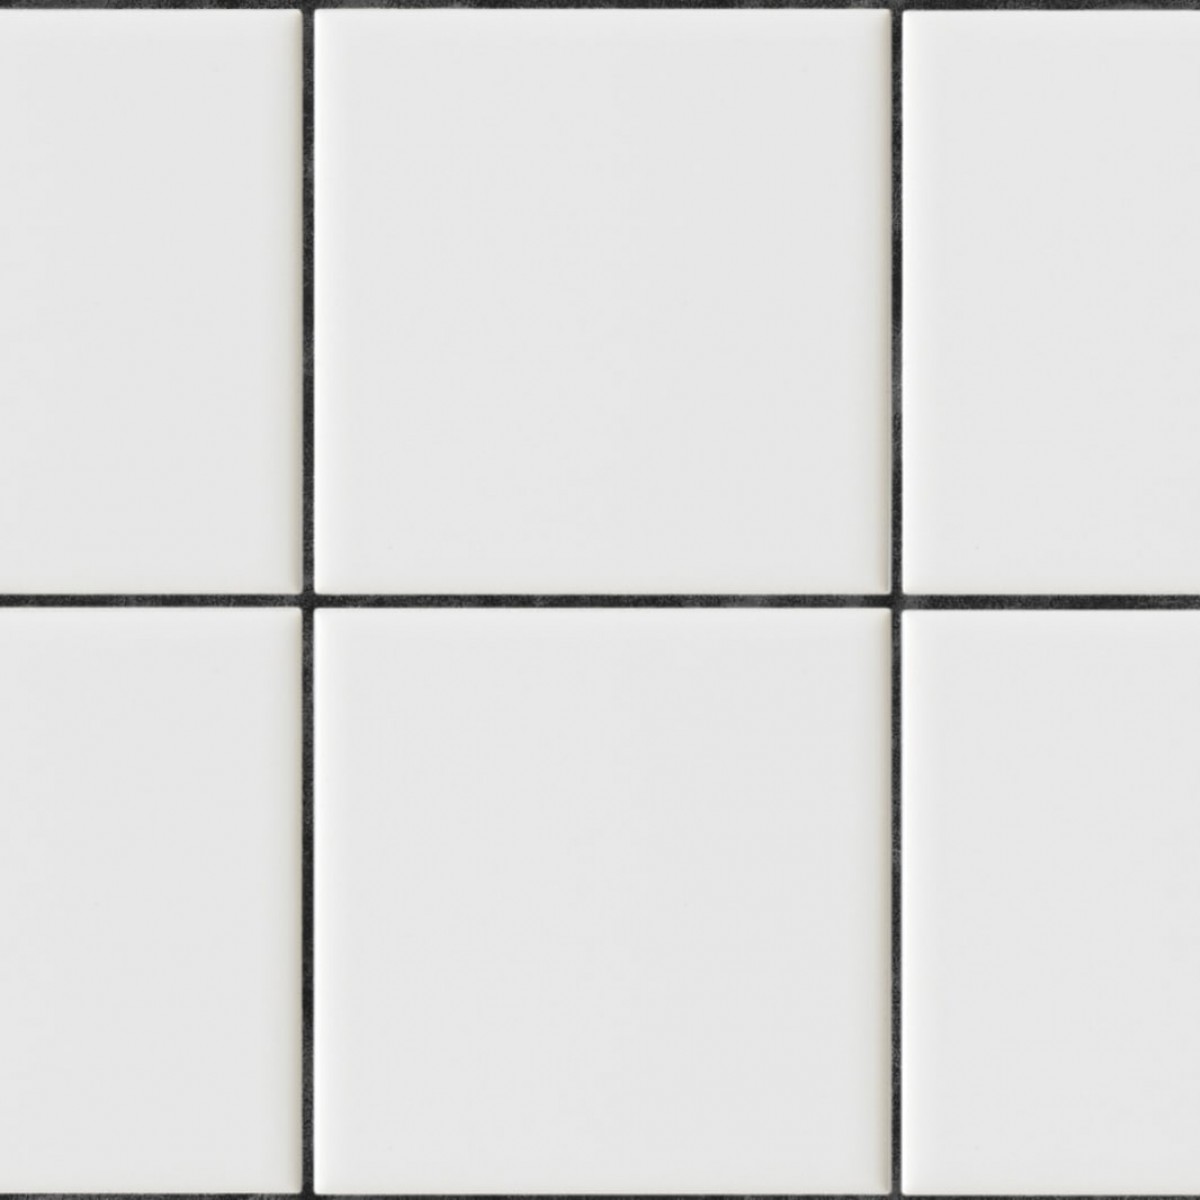 Tapet personalizabil Square Tiles, Clean White, Rebel Walls, 5 mp / rola, Tapet bucătărie 